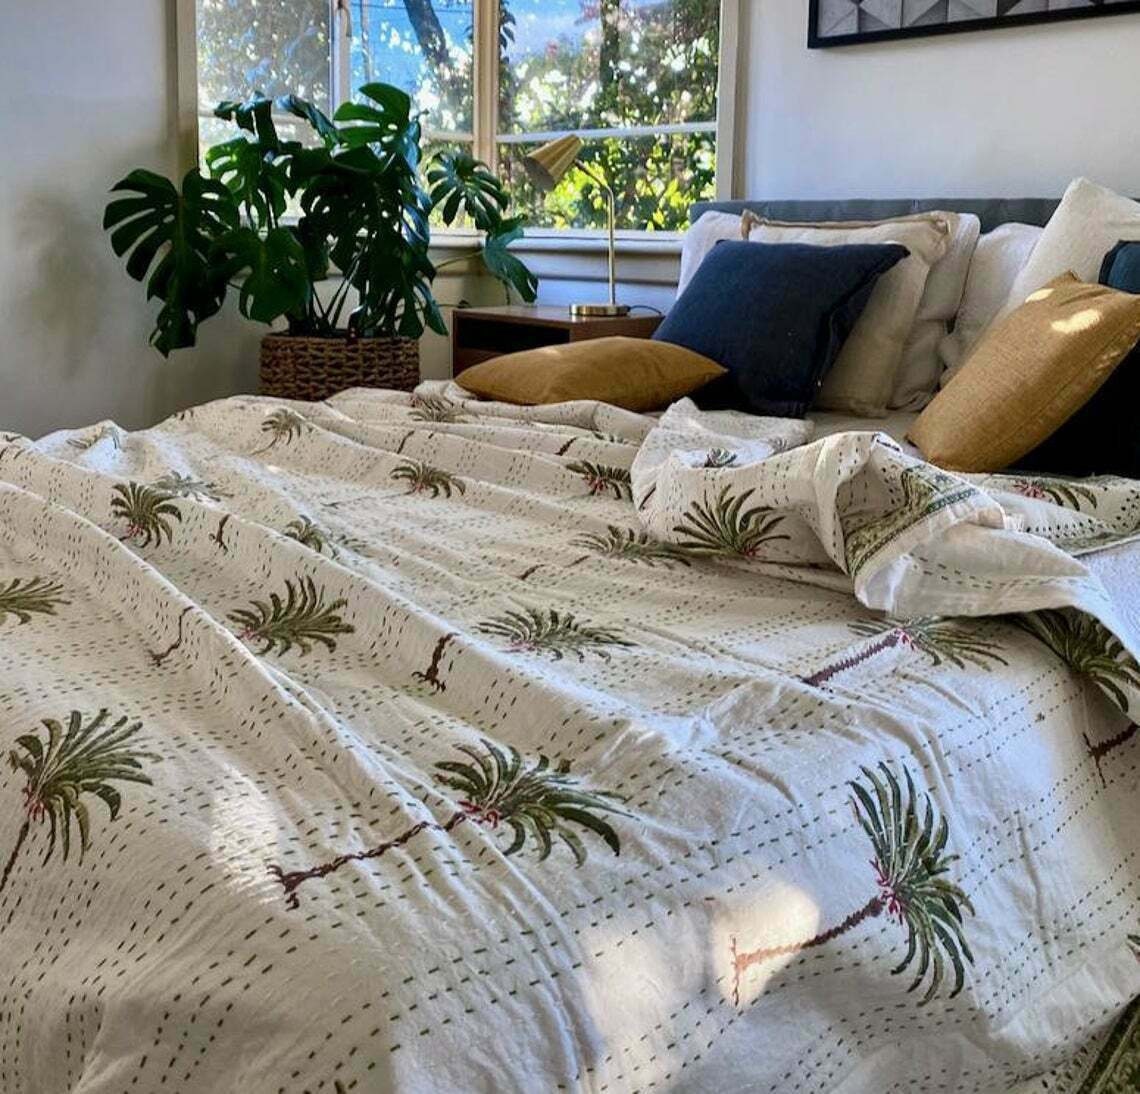 Details about   Indian Handmade Kantha Quilt Bedspread Bed Cover Vintage Palm Tree print Blanket 